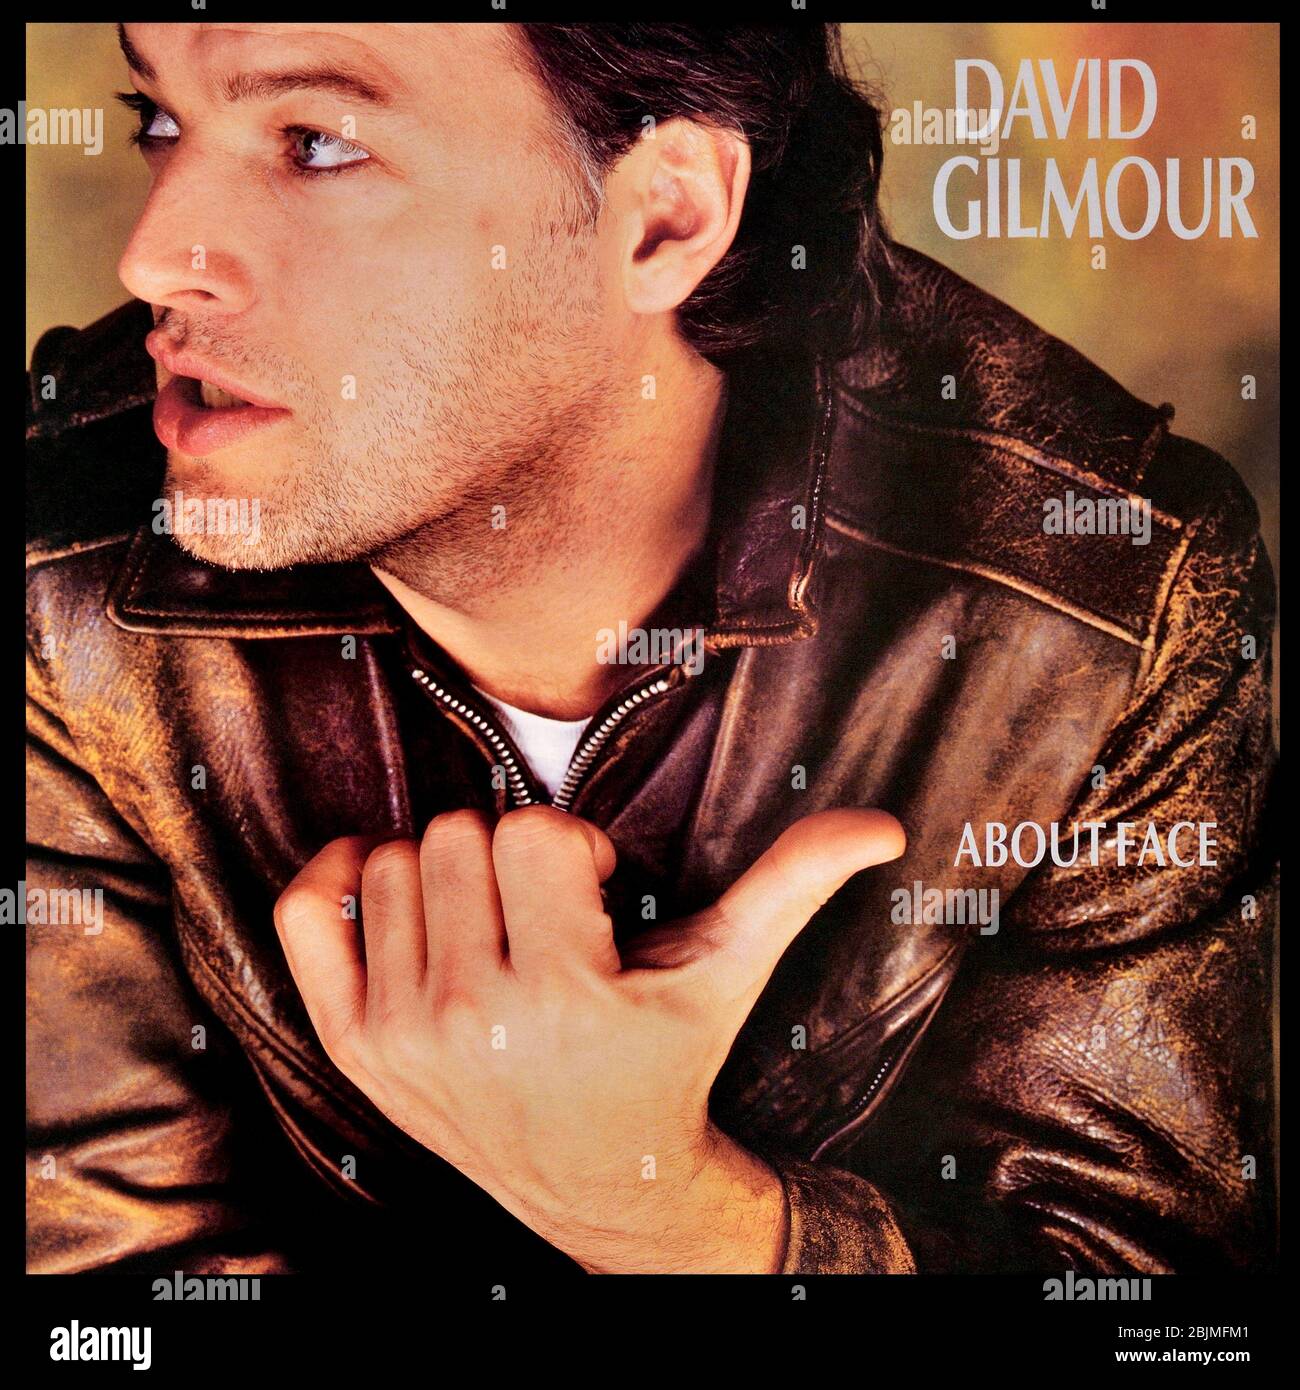 David Gilmour - original vinyl album cover - About Face - 1984 Stock Photo